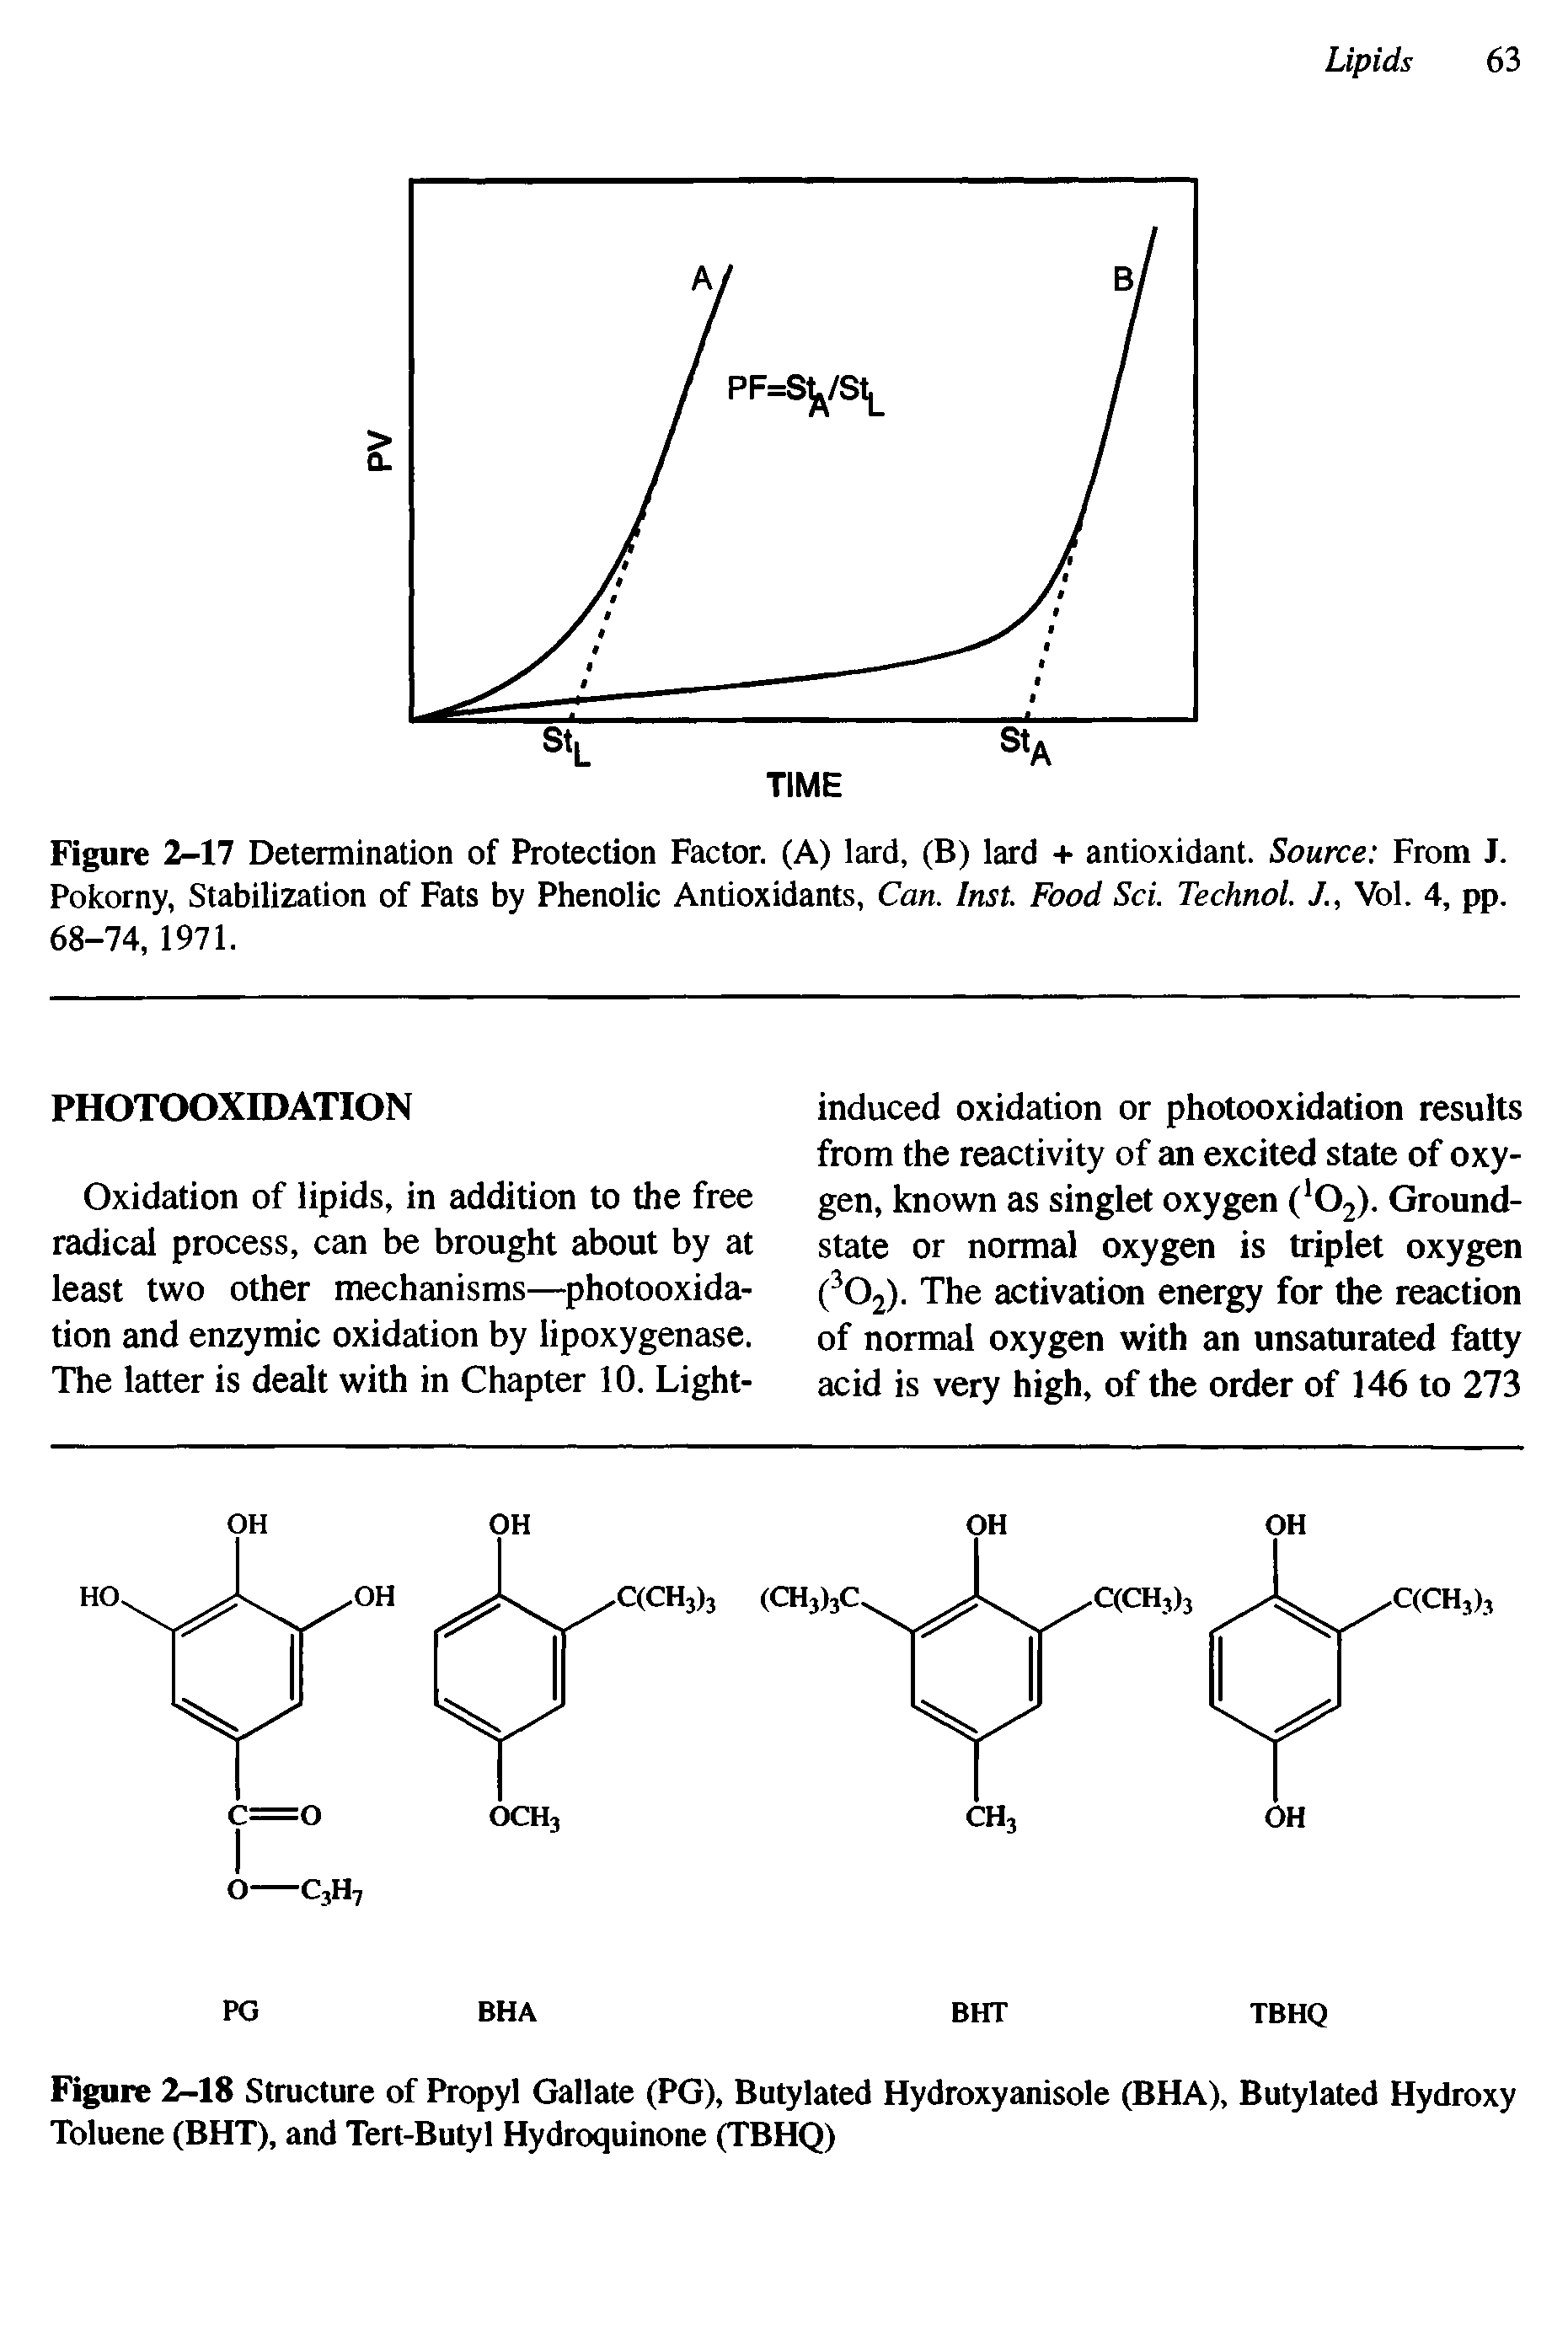 Figure 2-17 Determination of Protection Factor. (A) lard, (B) lard + antioxidant. Source From J. Pokorny, Stabilization of Fats by Phenolic Antioxidants, Can. Inst. Food Sci. Technol. J., Vol. 4, pp. 68-74, 1971.